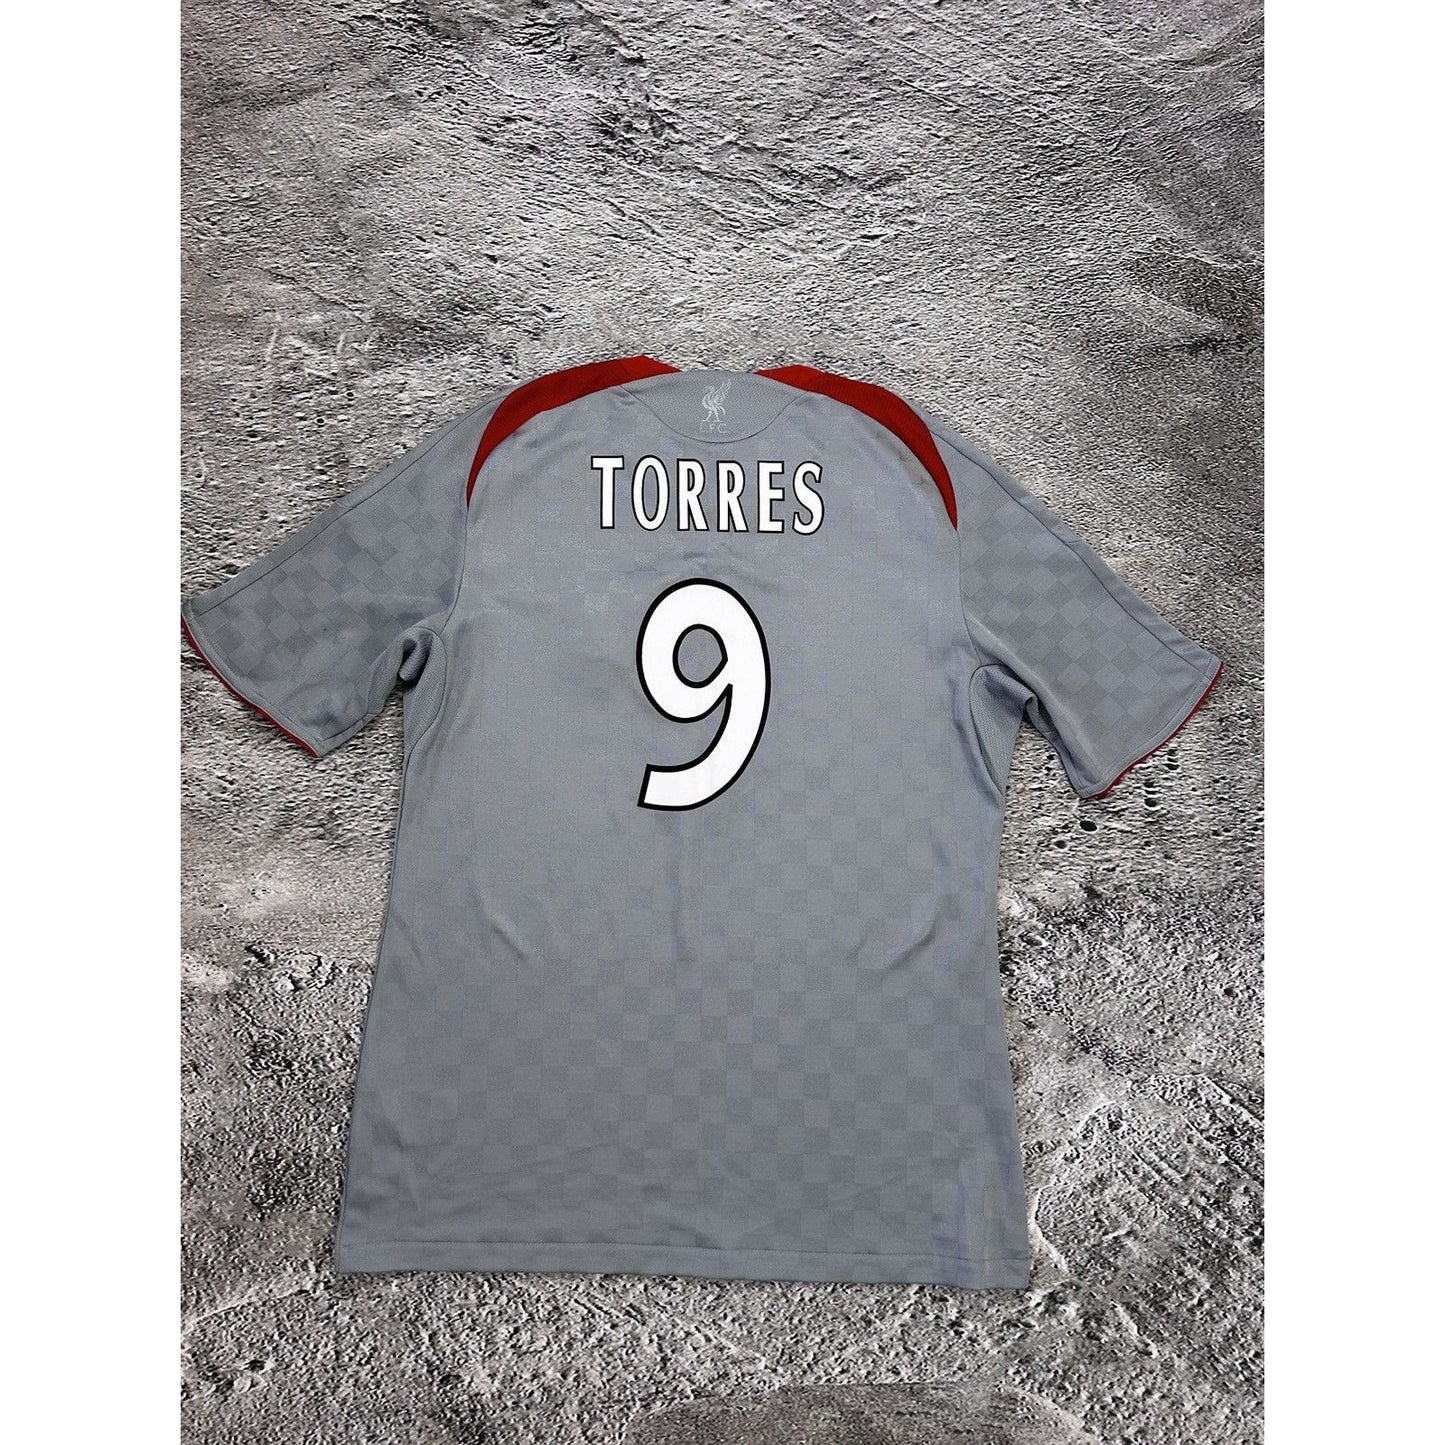 Torres Liverpool jersey grey carlsberg 2008 2009